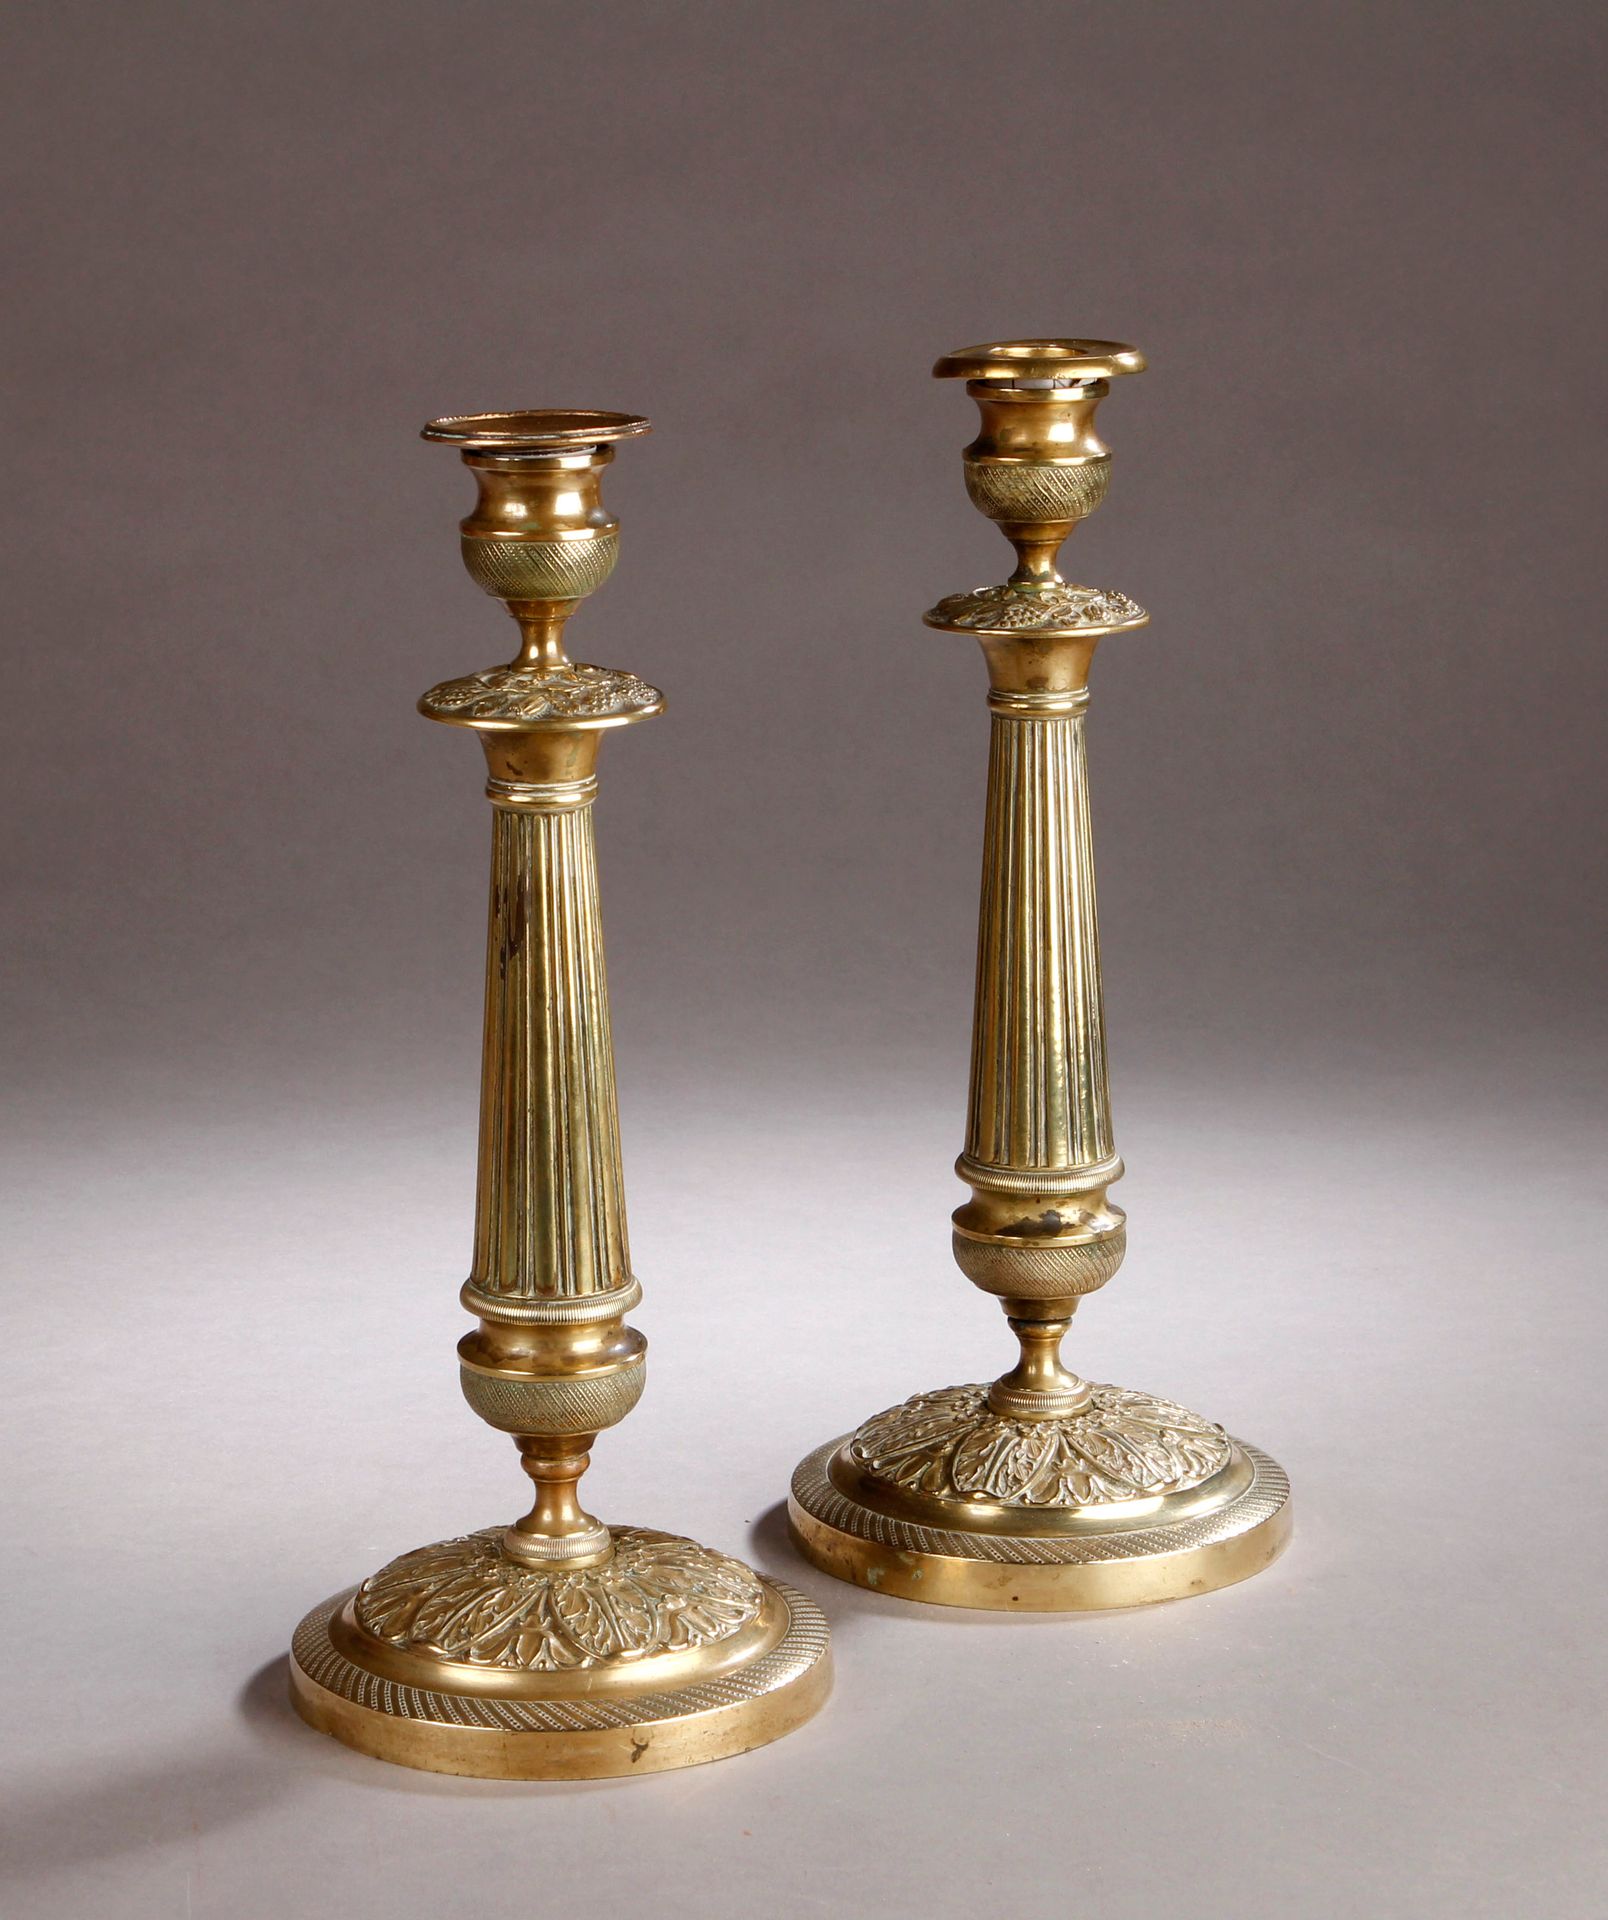 Null 一对黄铜烛台，烛台轴上有小圆点，圆形底座上装饰有刺叶和棕榈花。
19世纪中期。
H.30厘米